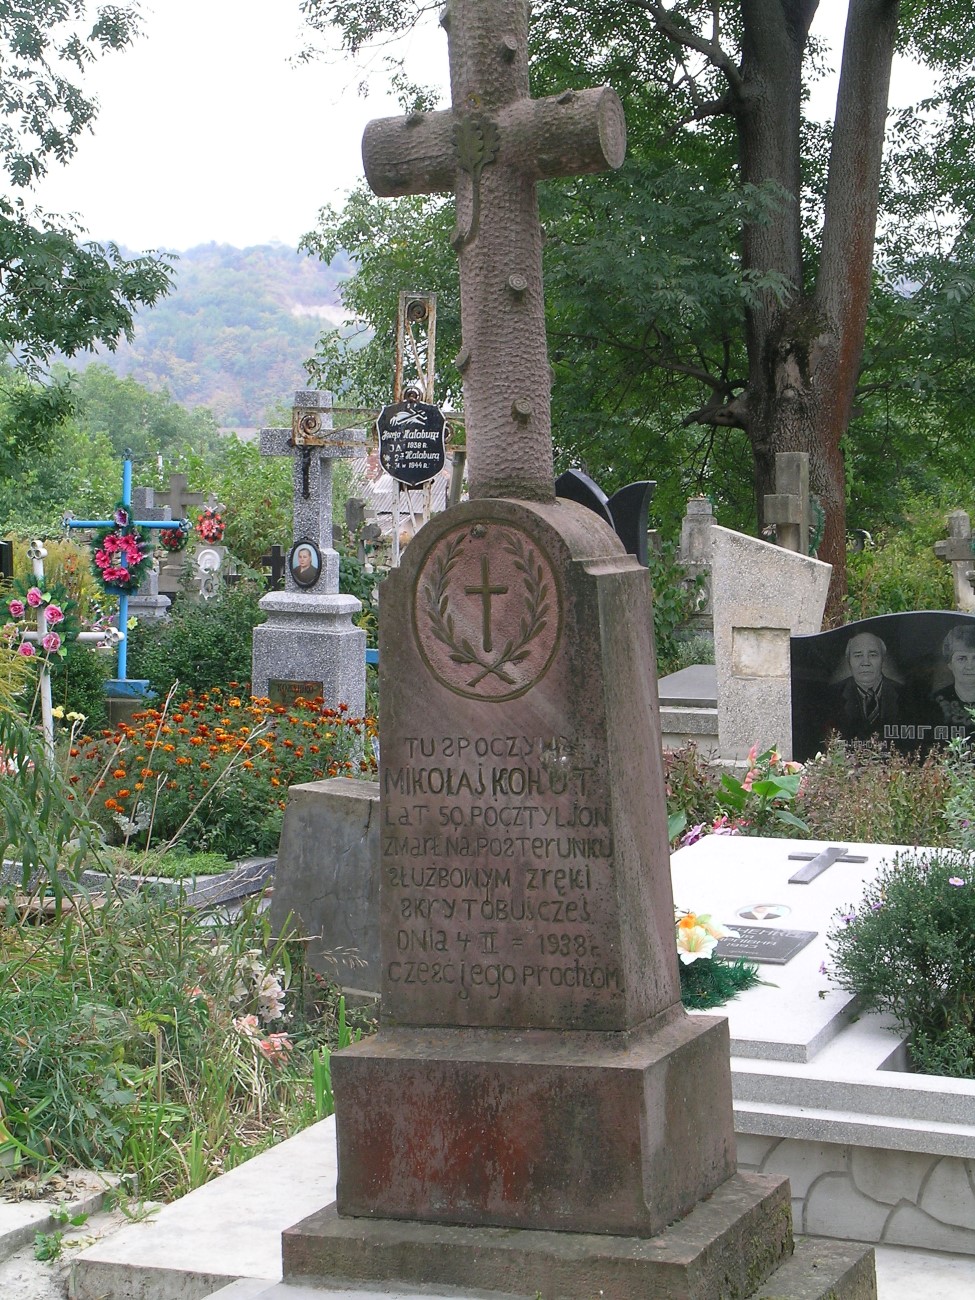 Tombstone of Nikolai Kohut, Zaleszczyki cemetery, as of 2019.